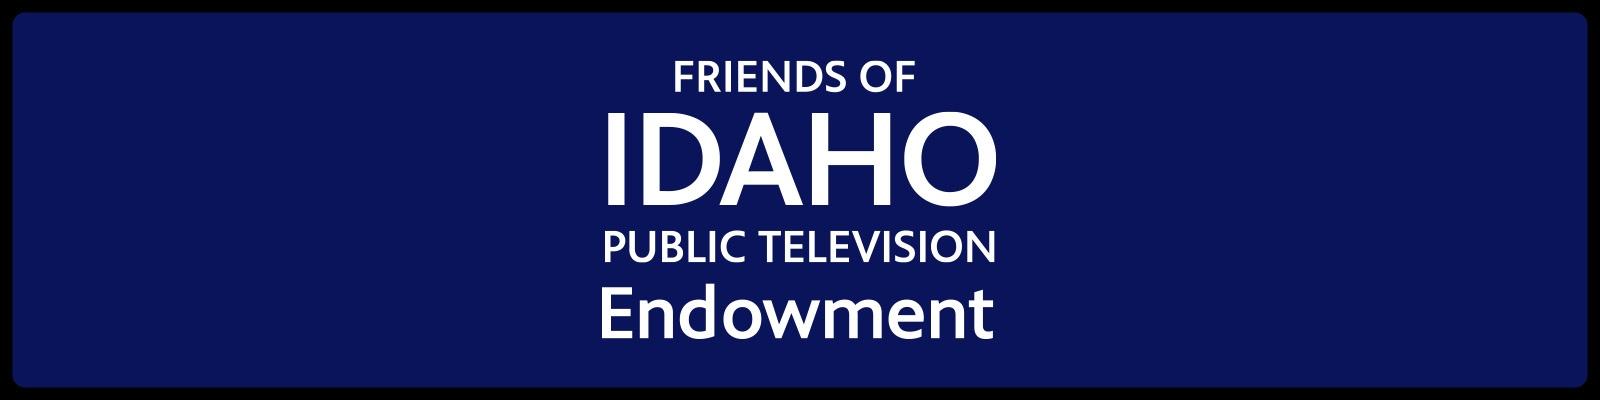 Friends of Idaho Public Television Endowment